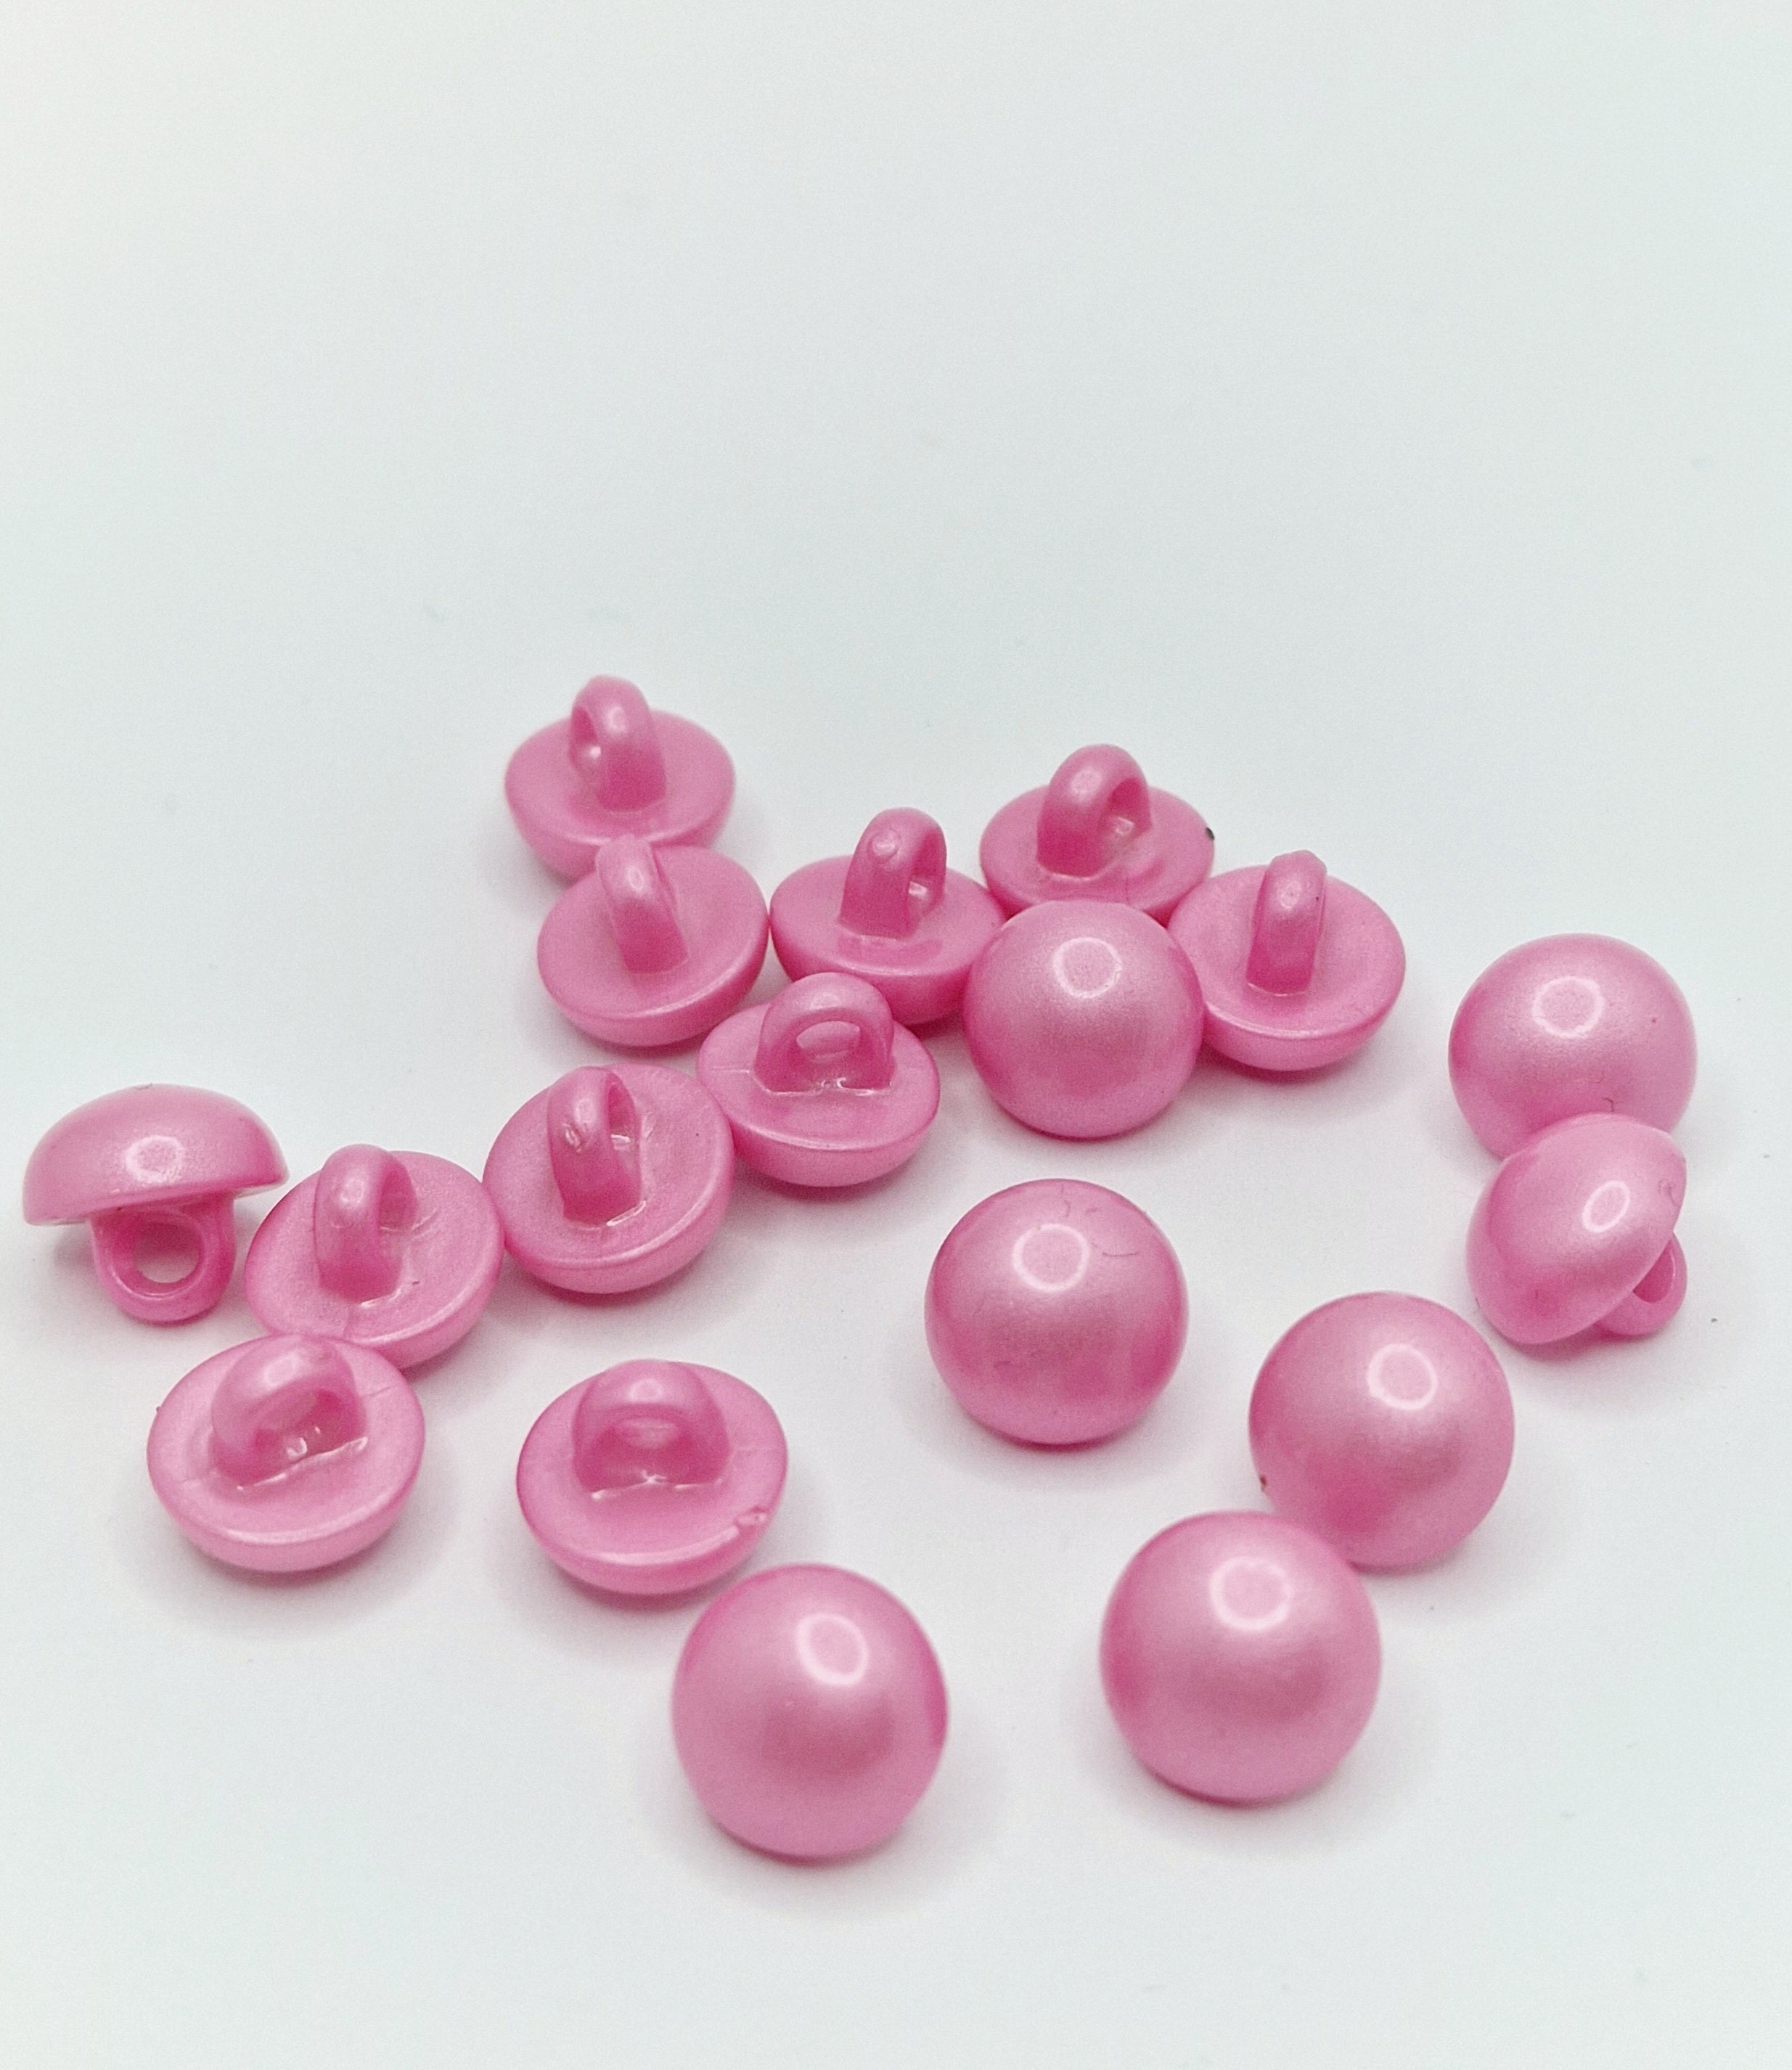 MajorCrafts 24pcs 11mm Light Pink High-Grade Acrylic Small Round Sewing Mushroom Shank Buttons